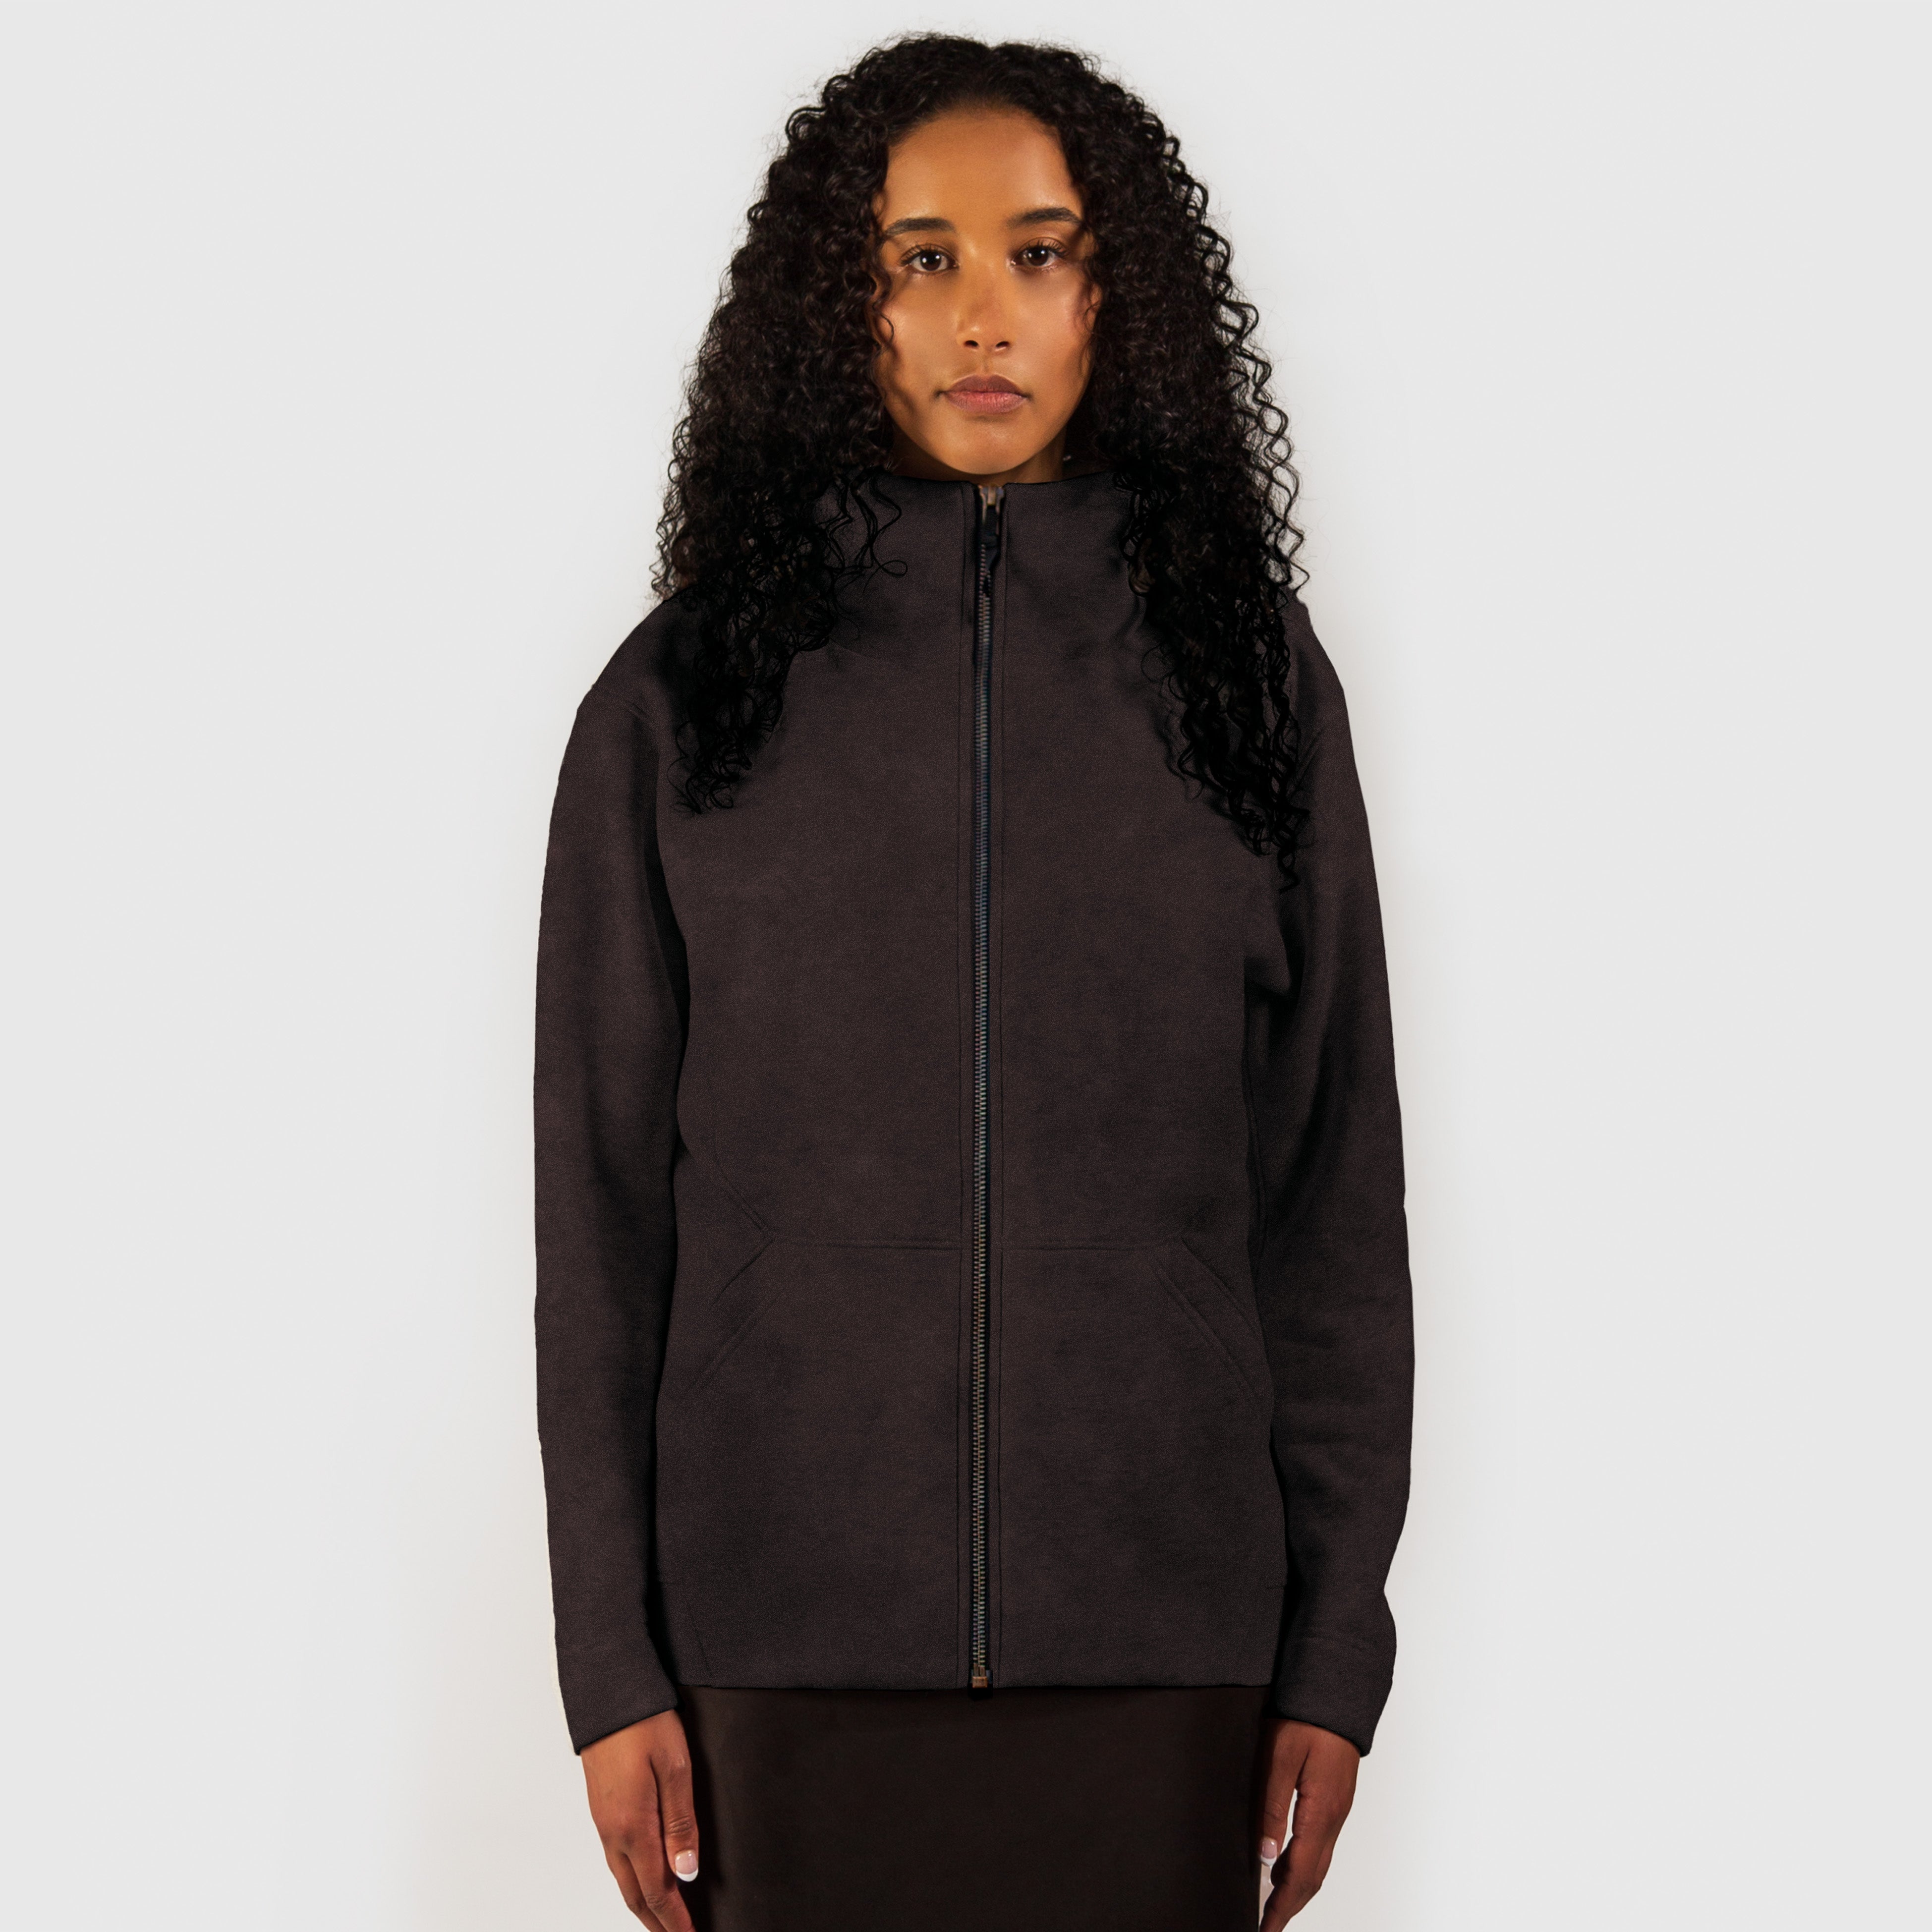 Amara – Fleece Full-Zip Hoodie in Black Wash